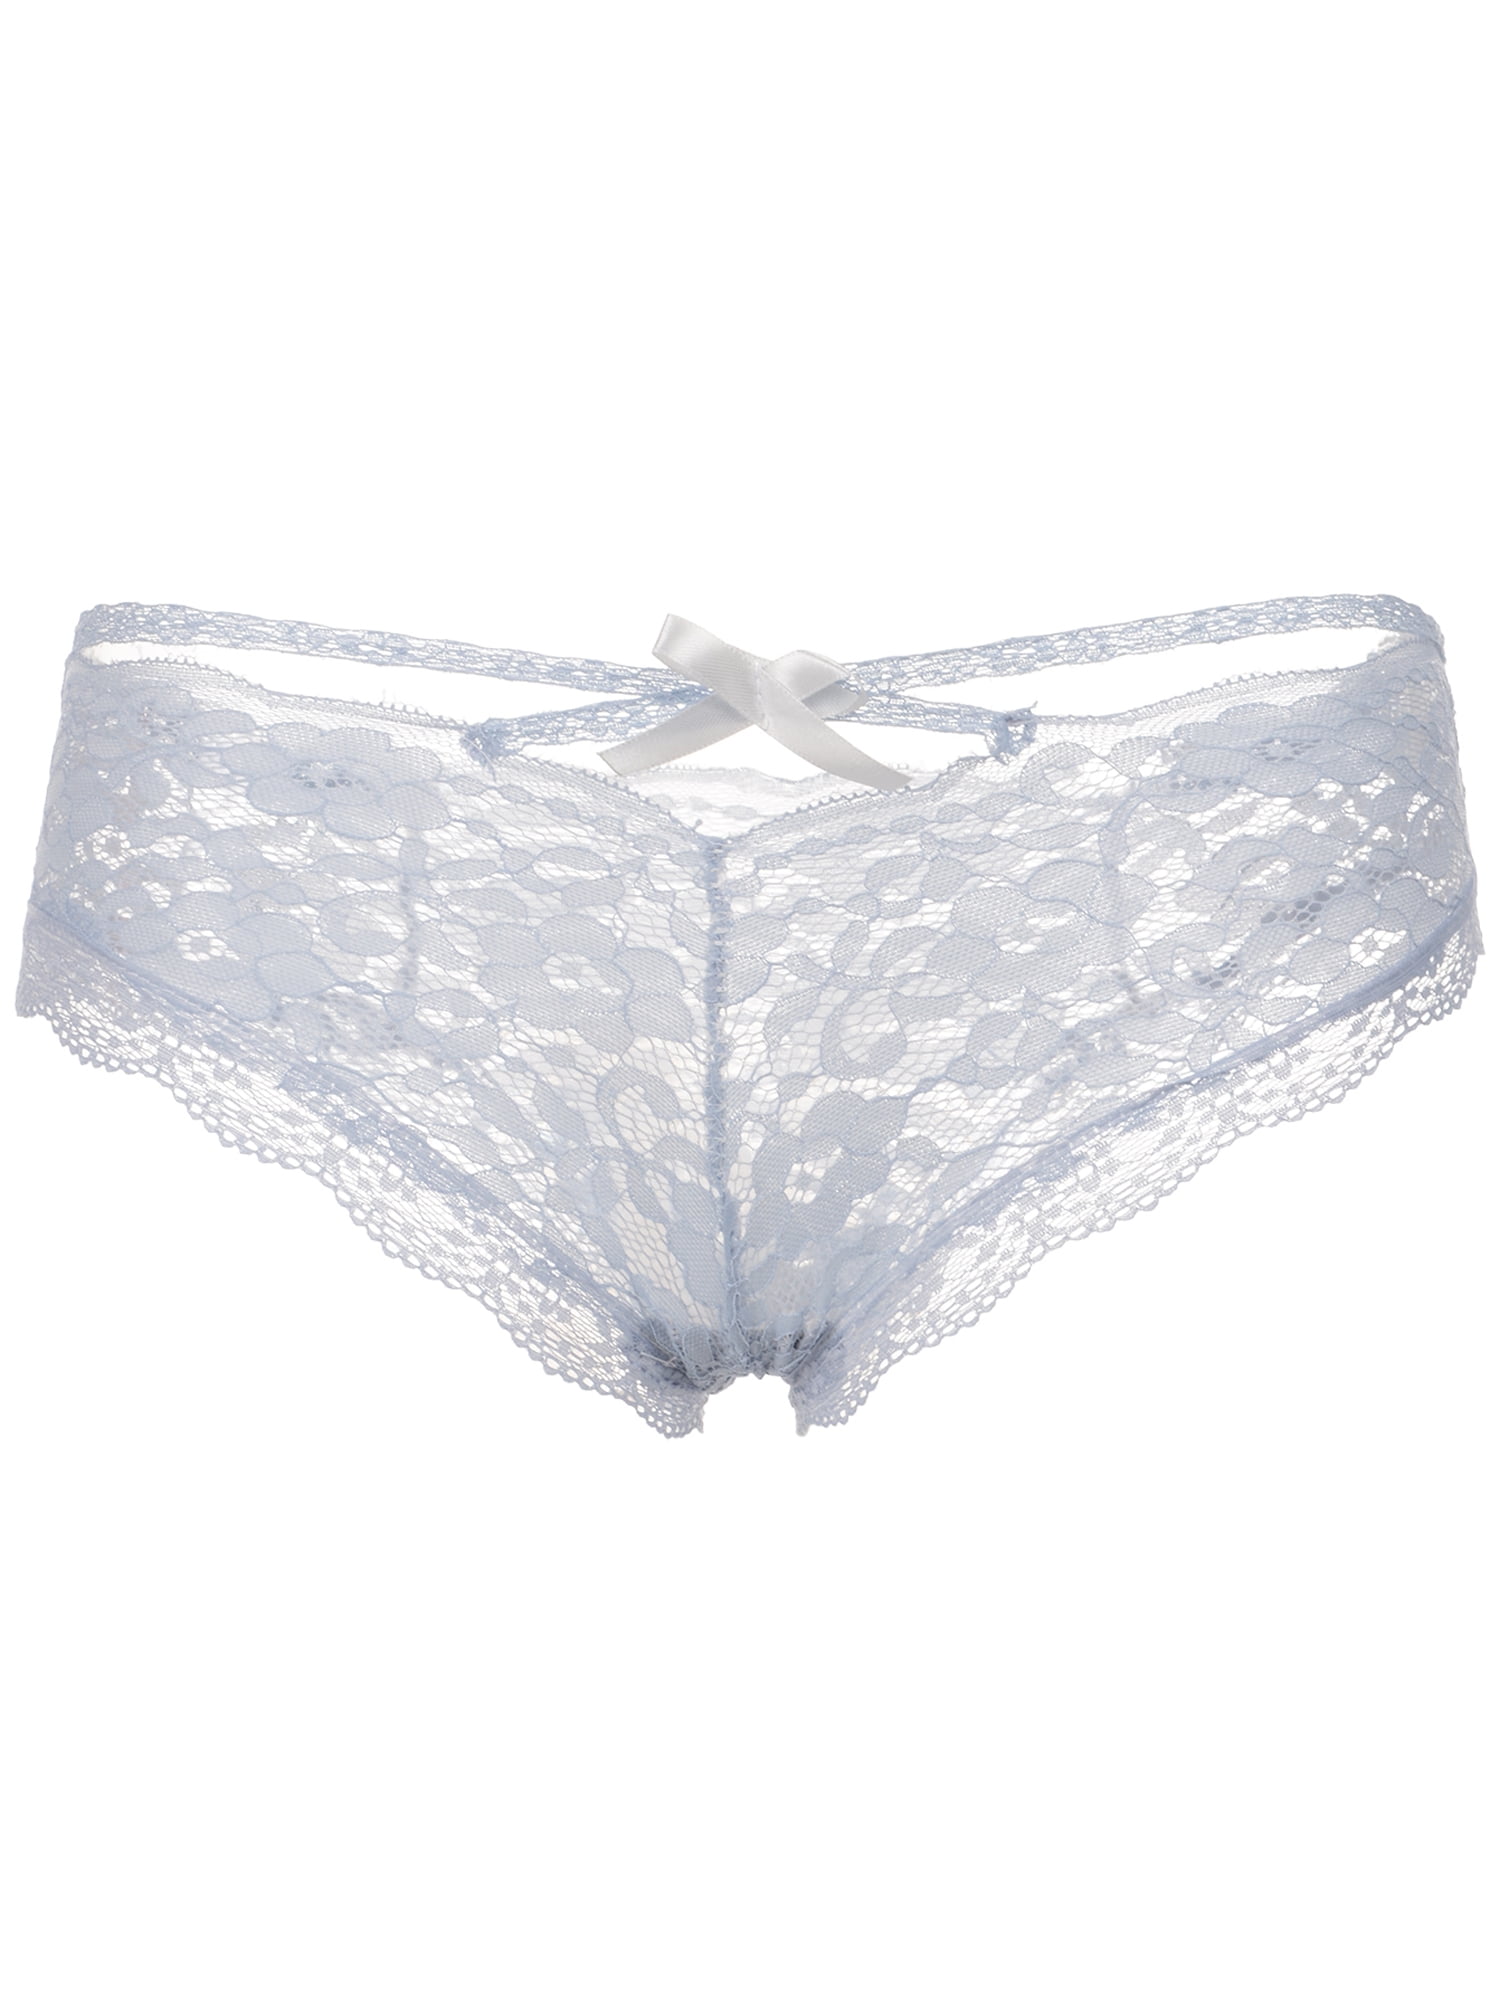 Roliyen Women Underwear Brief Hot Panties For Seeing Through Low Waist Lace  Skinny Panties 